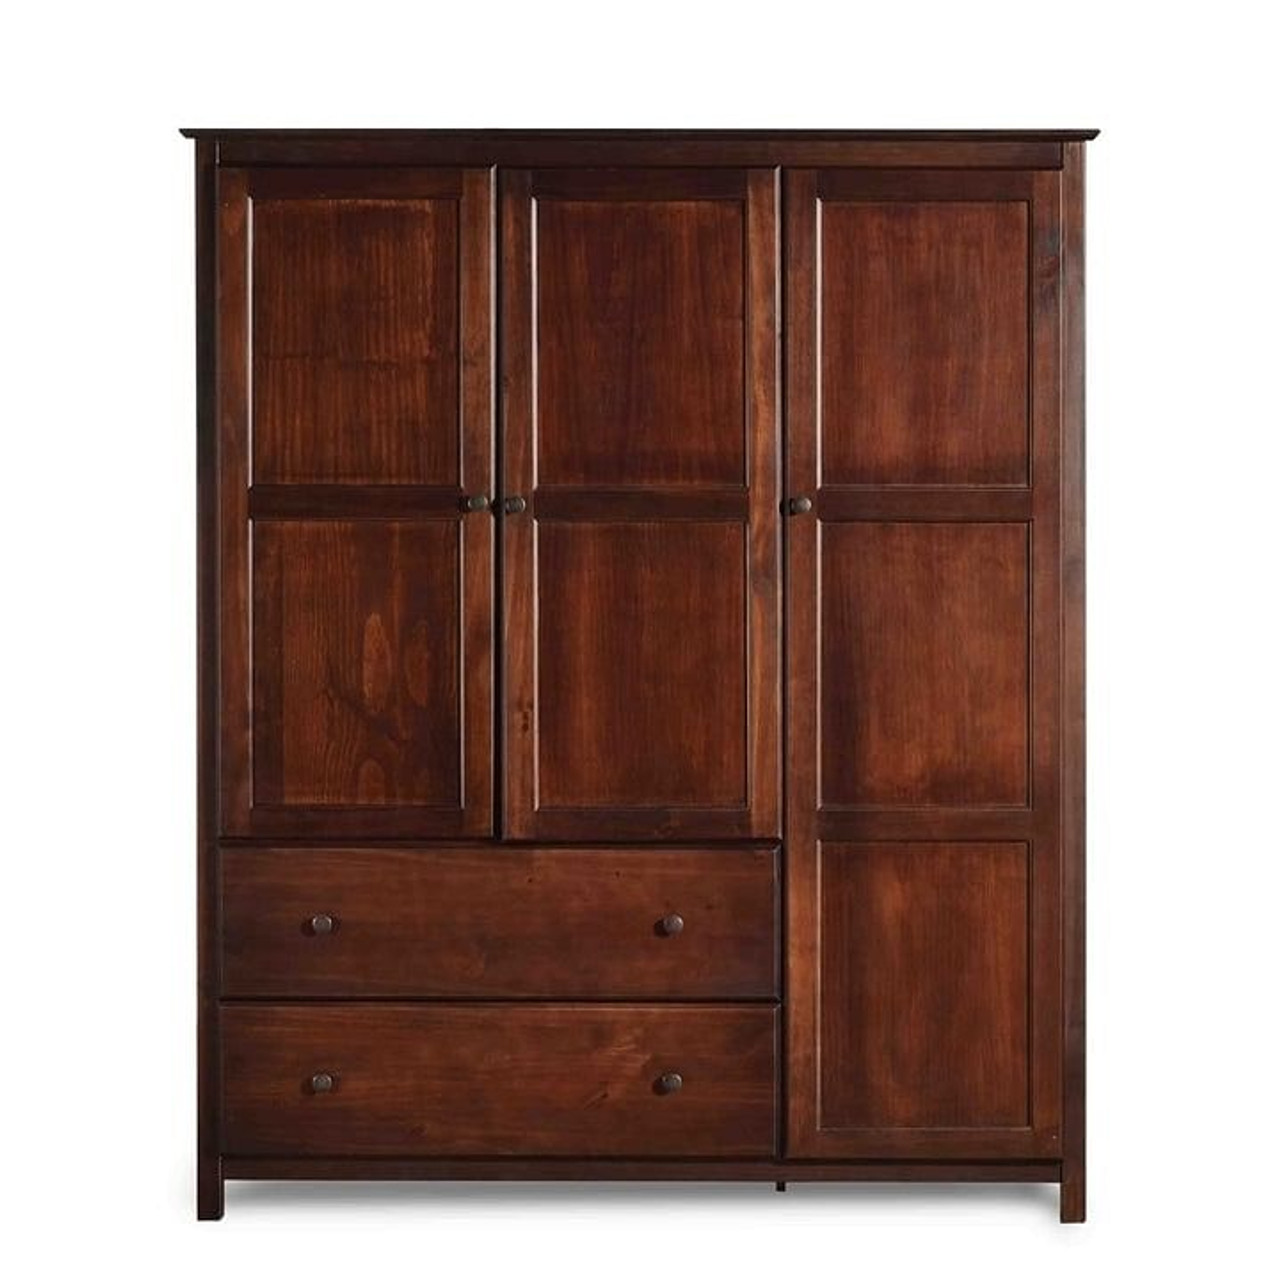 Cherry Wood Finish Bedroom Wardrobe Armoire Cabinet Closet